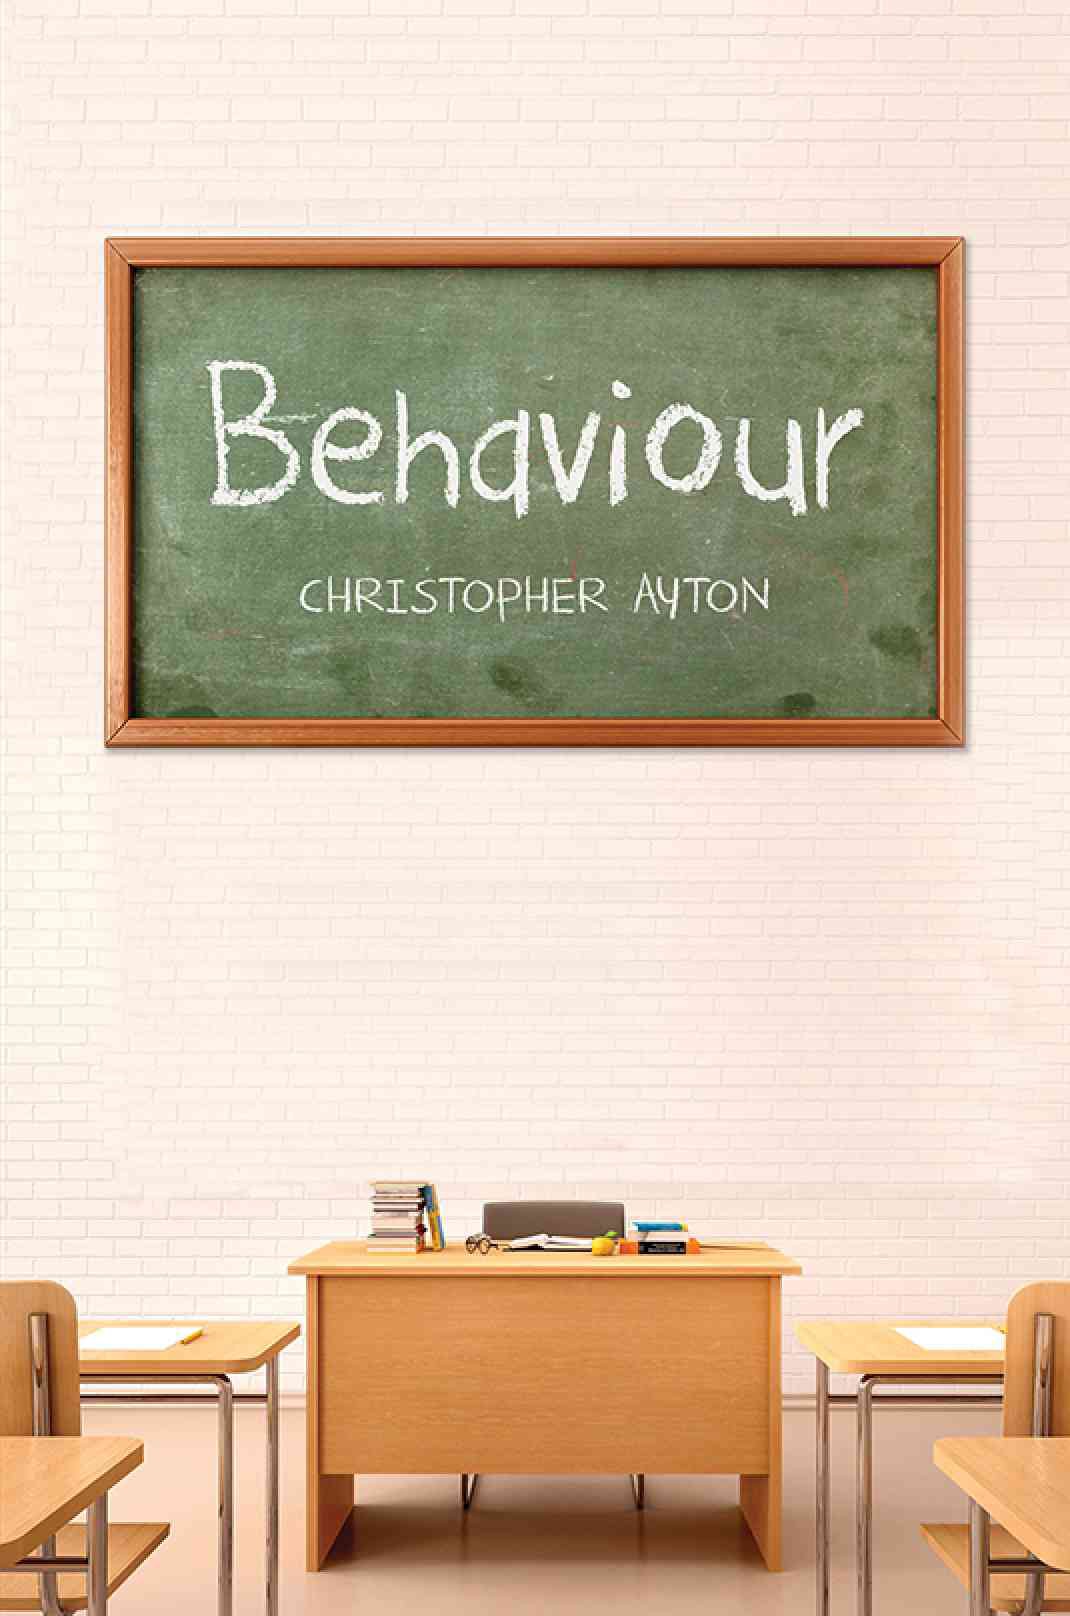 Uxbridge FM Interviewed Chris Ayton for His Book, Behaviour